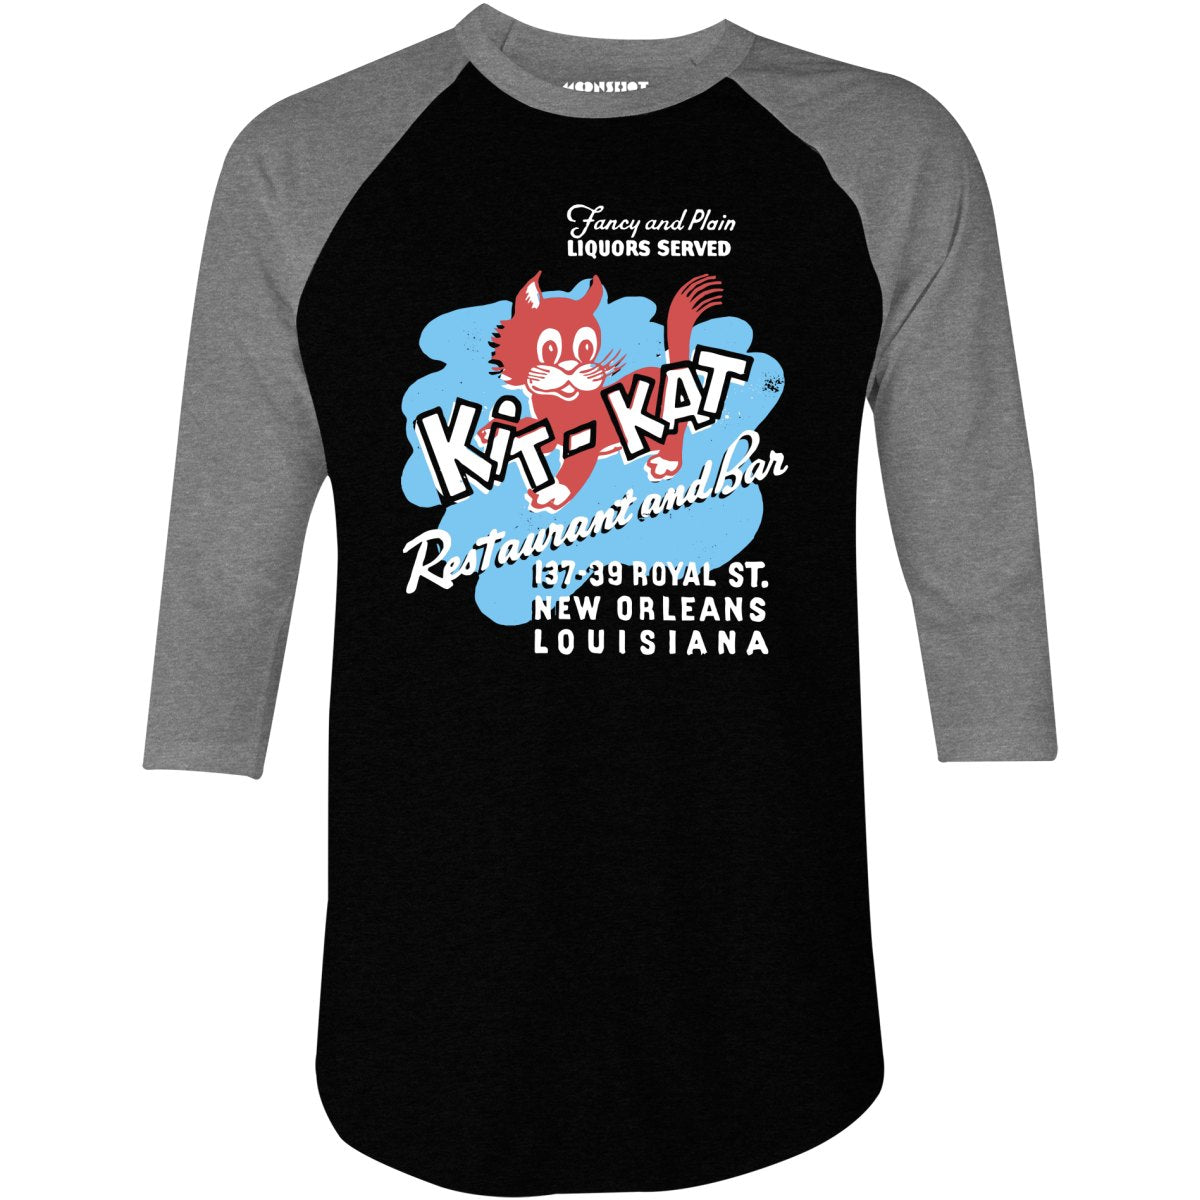 Kit-Kat - New Orleans, LA - Vintage Restaurant - 3/4 Sleeve Raglan T-Shirt